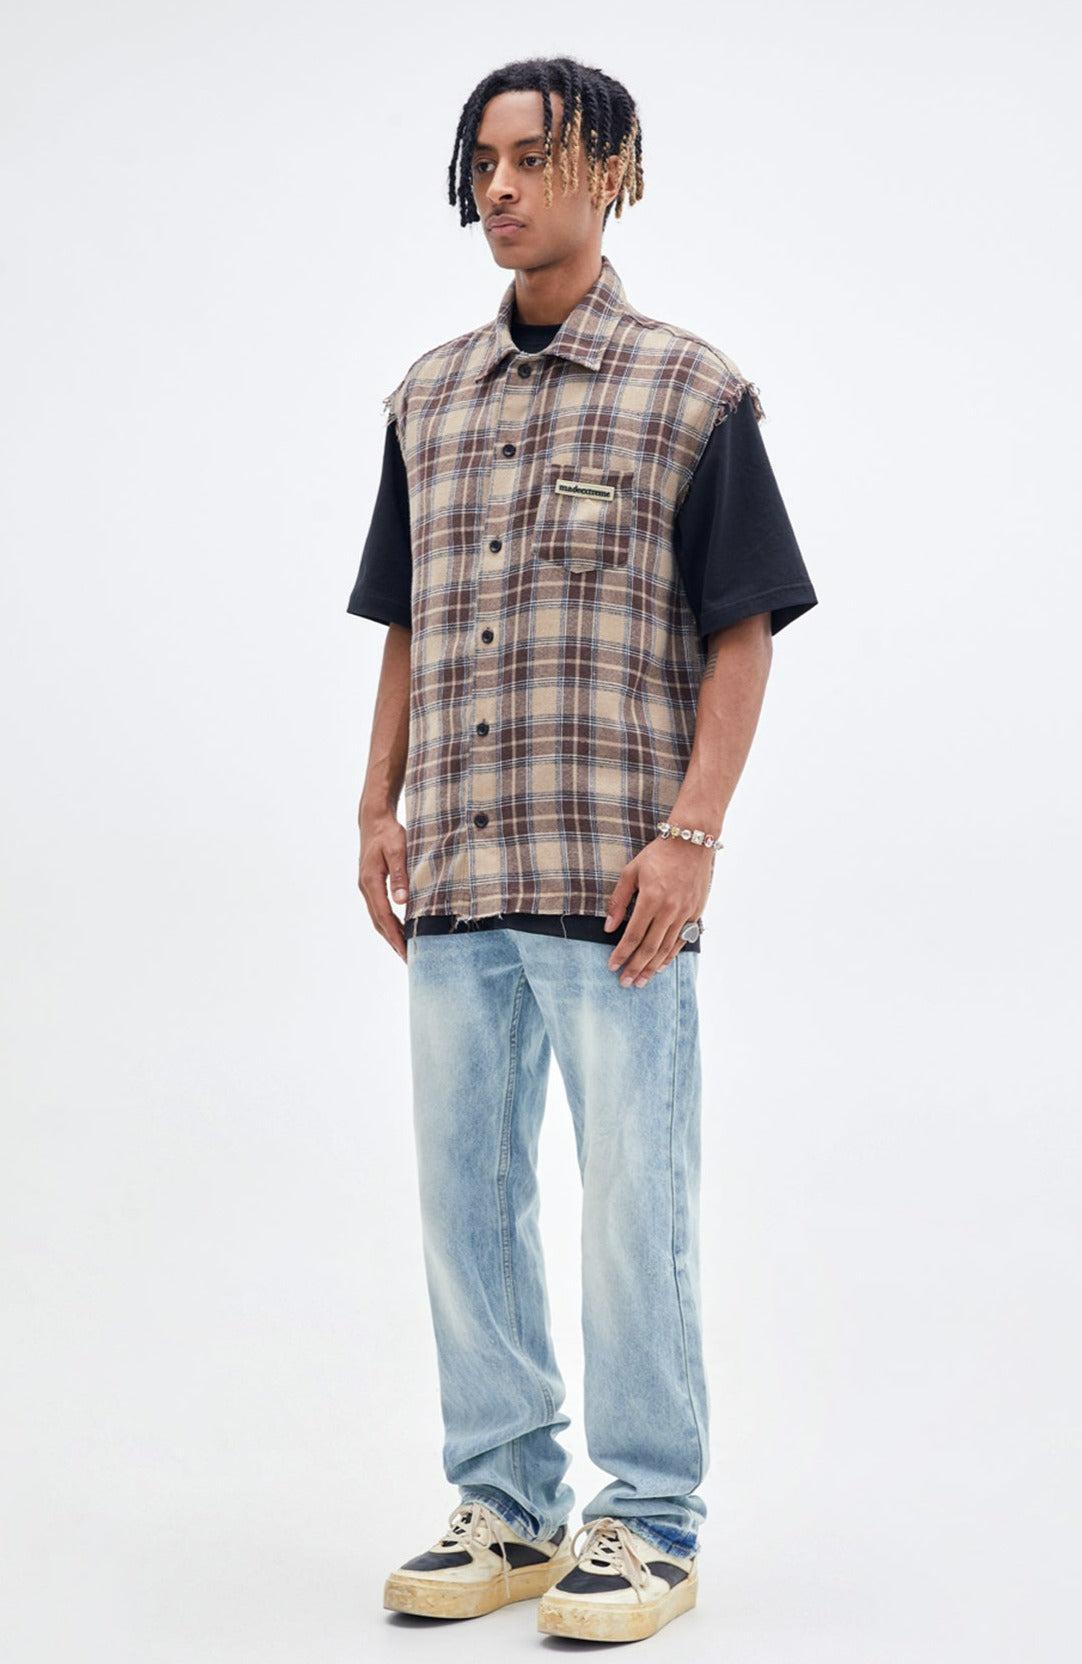 Fringe Sleeveless Plaid Shirt Korean Street Fashion Shirt By Made Extreme Shop Online at OH Vault